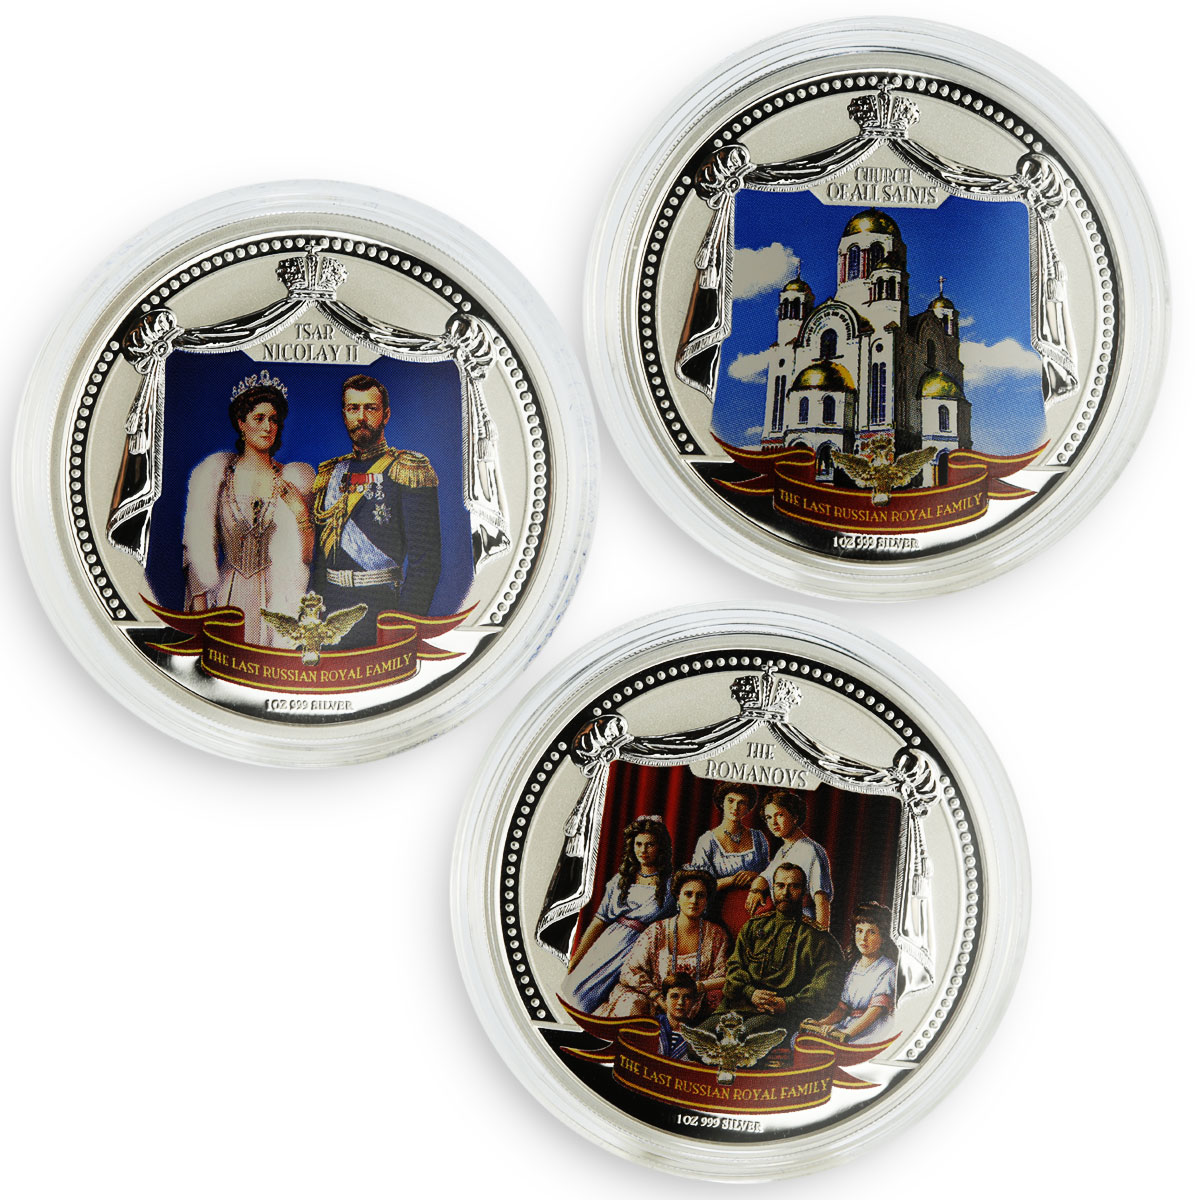 Fiji set 3 coins The Last Russian Royal Family Romanovs colored silver 2009